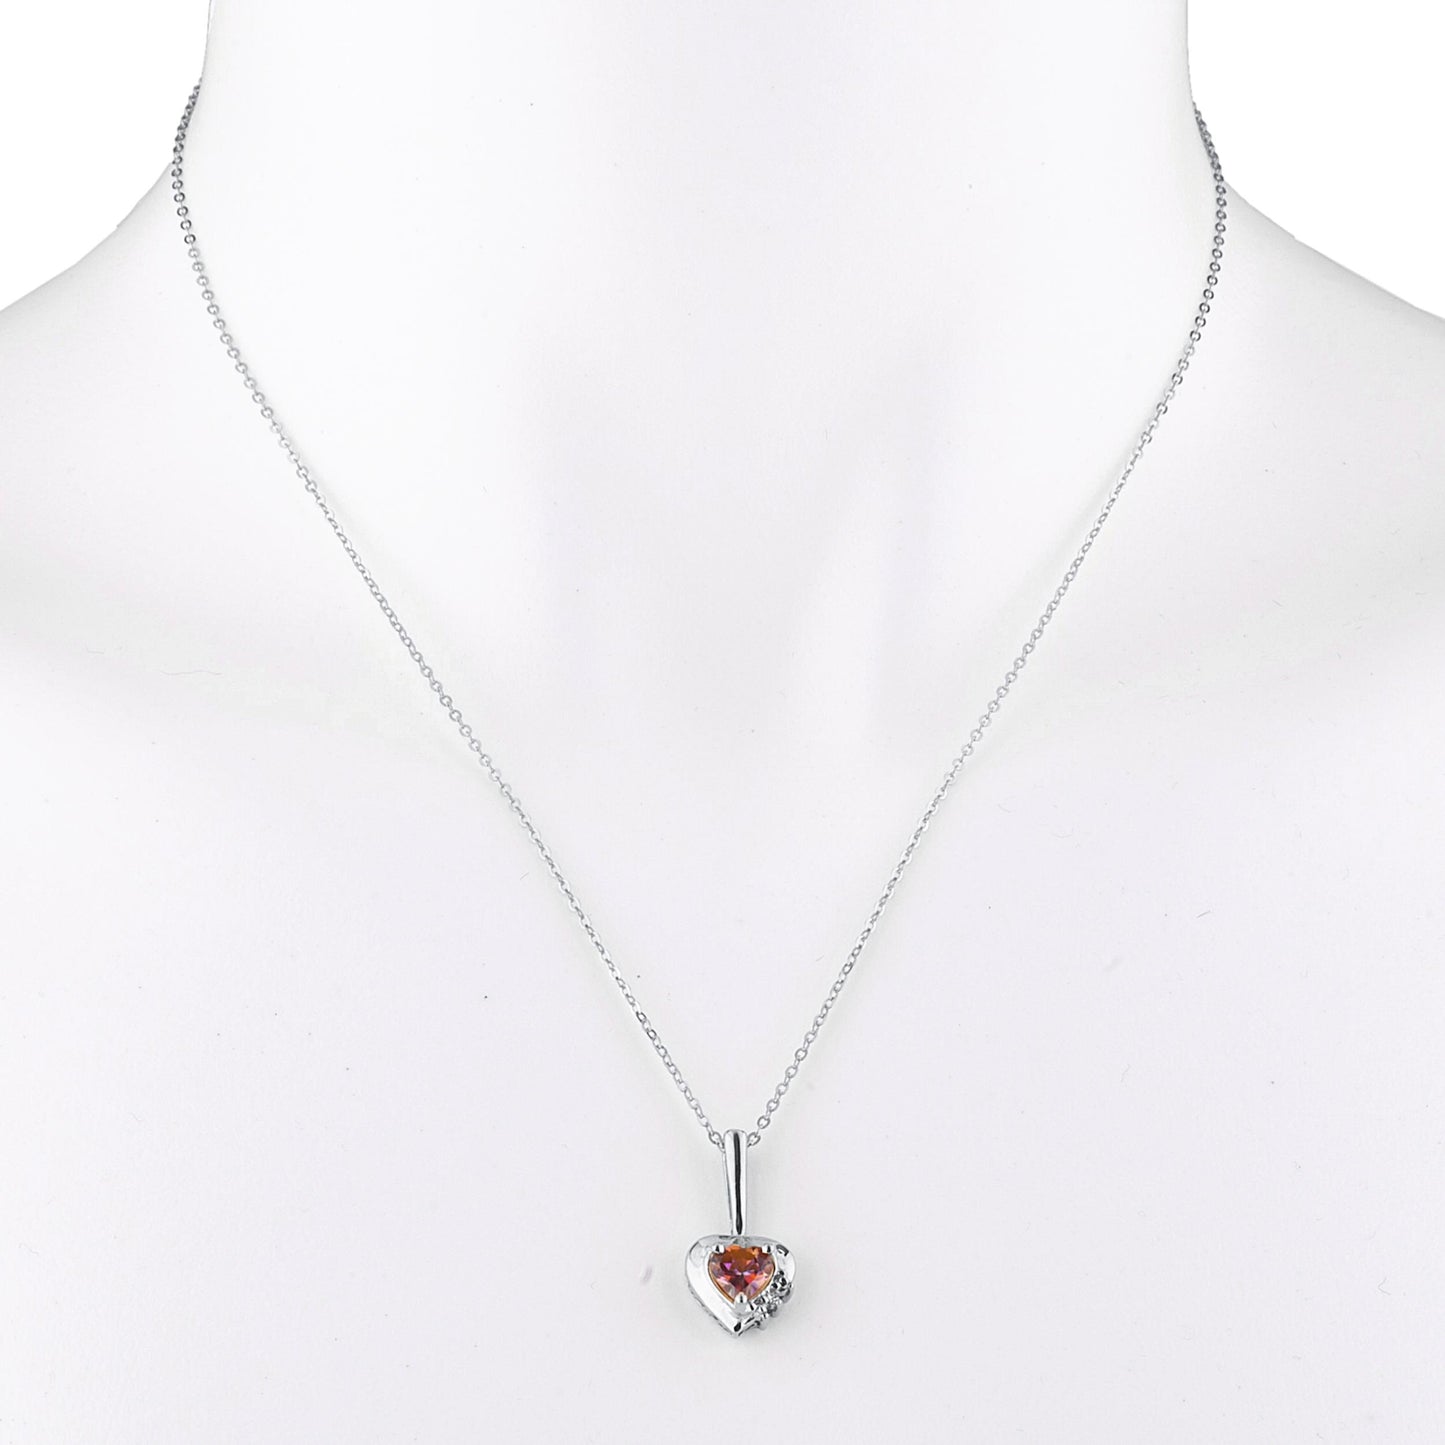 14Kt Gold Natural Ecstasy Mystic Topaz & Diamond Heart Design Pendant Necklace